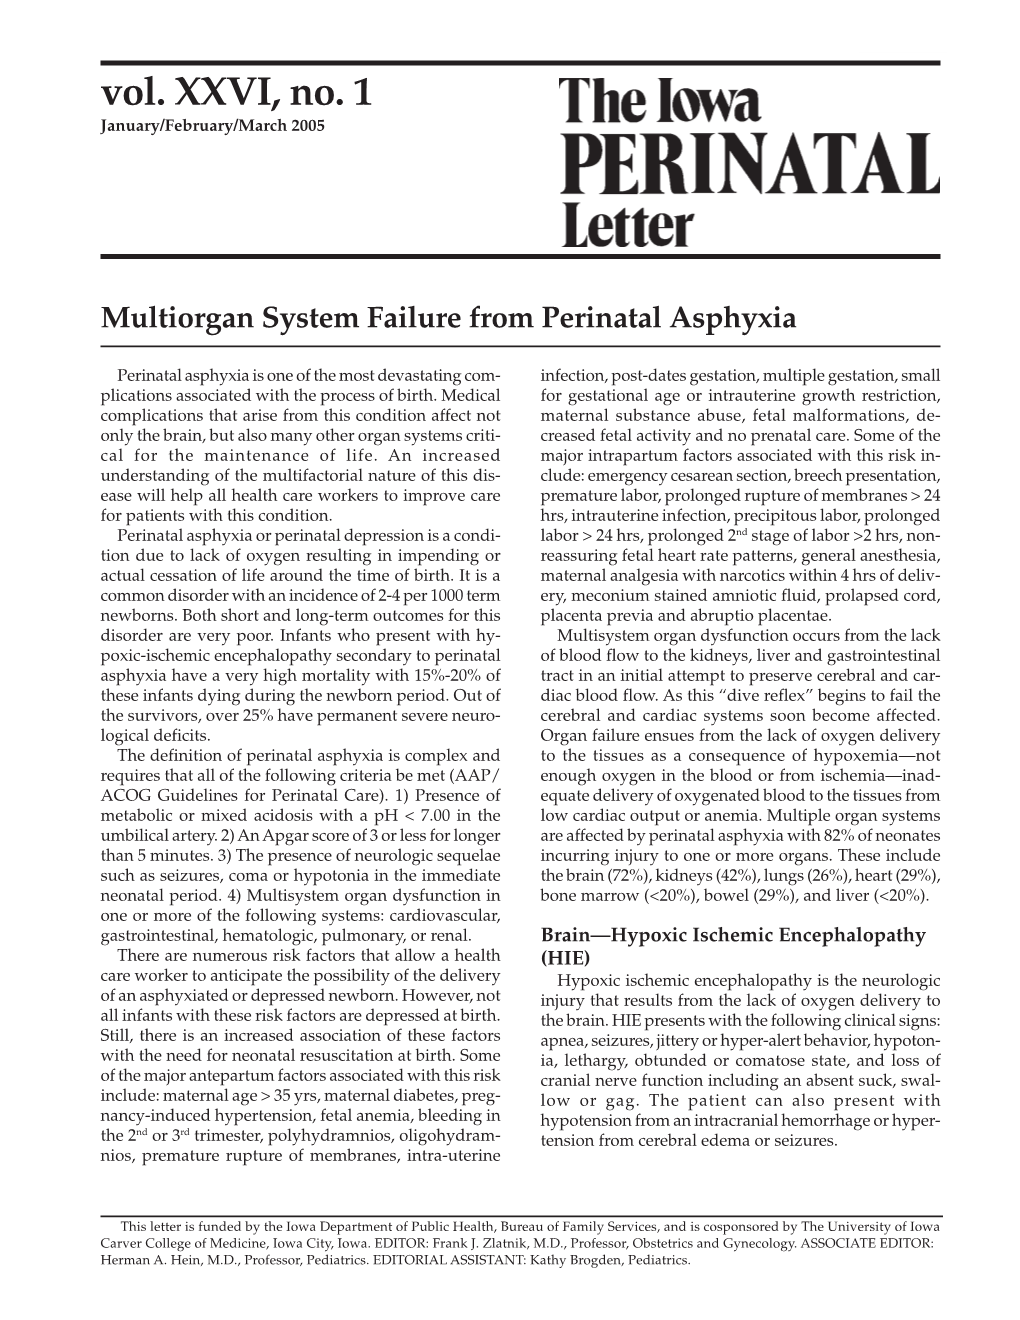 Multi-Organ System Failure from Perinatal Asphyxia